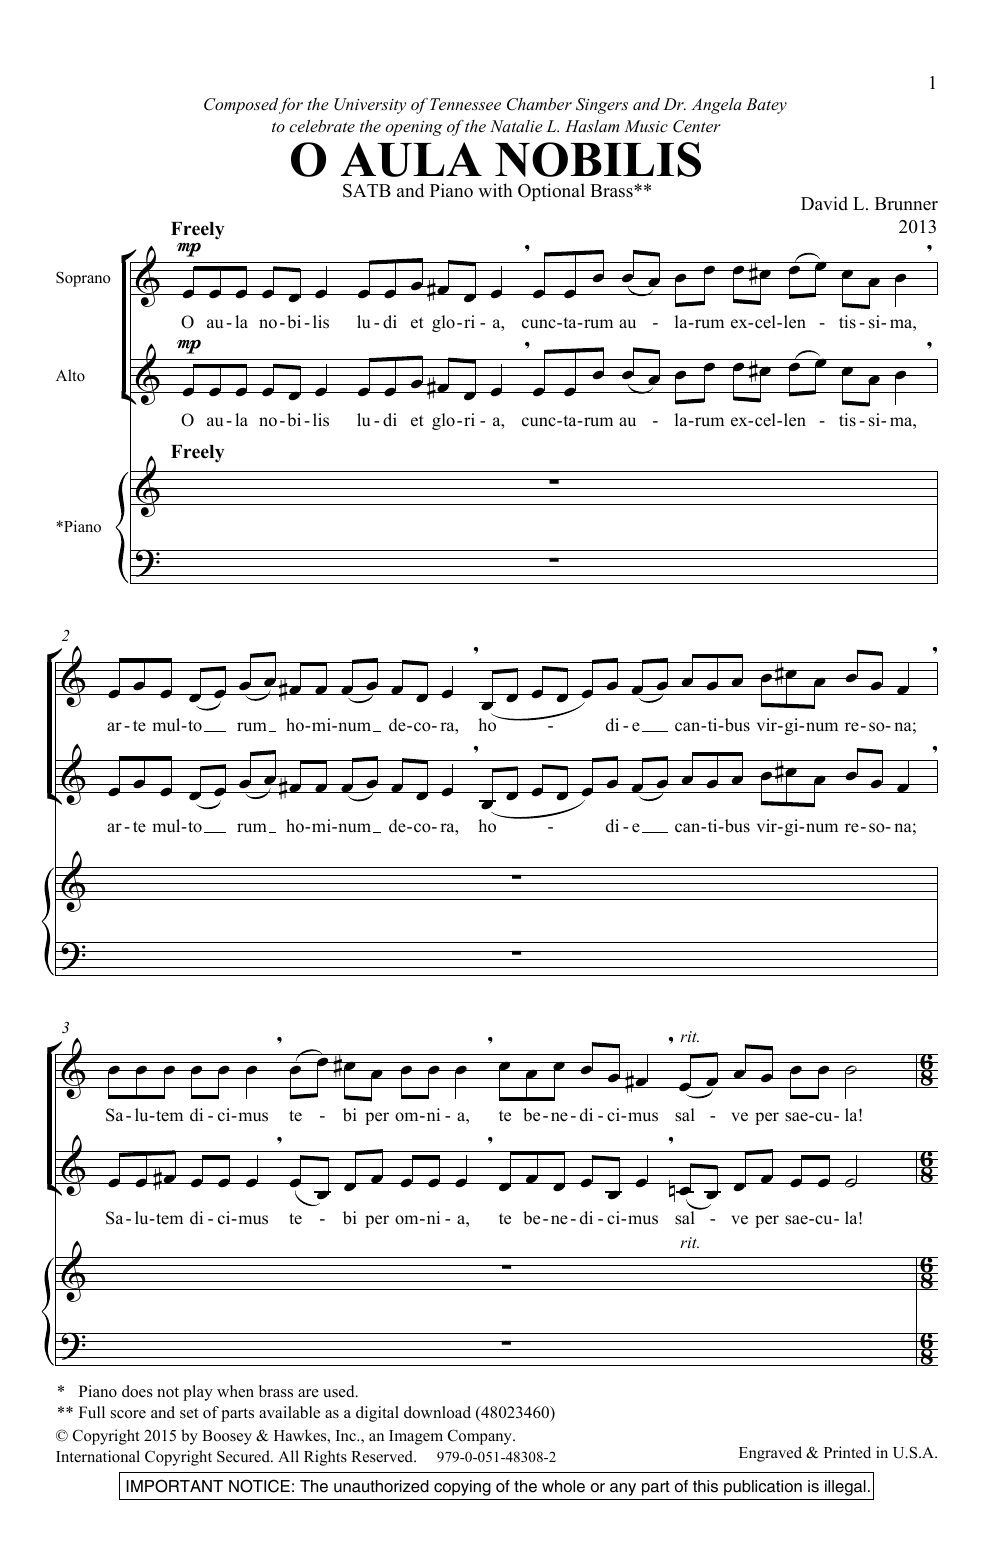 David Brunner O Aula Nobilis Sheet Music Notes & Chords for SATB Choir - Download or Print PDF